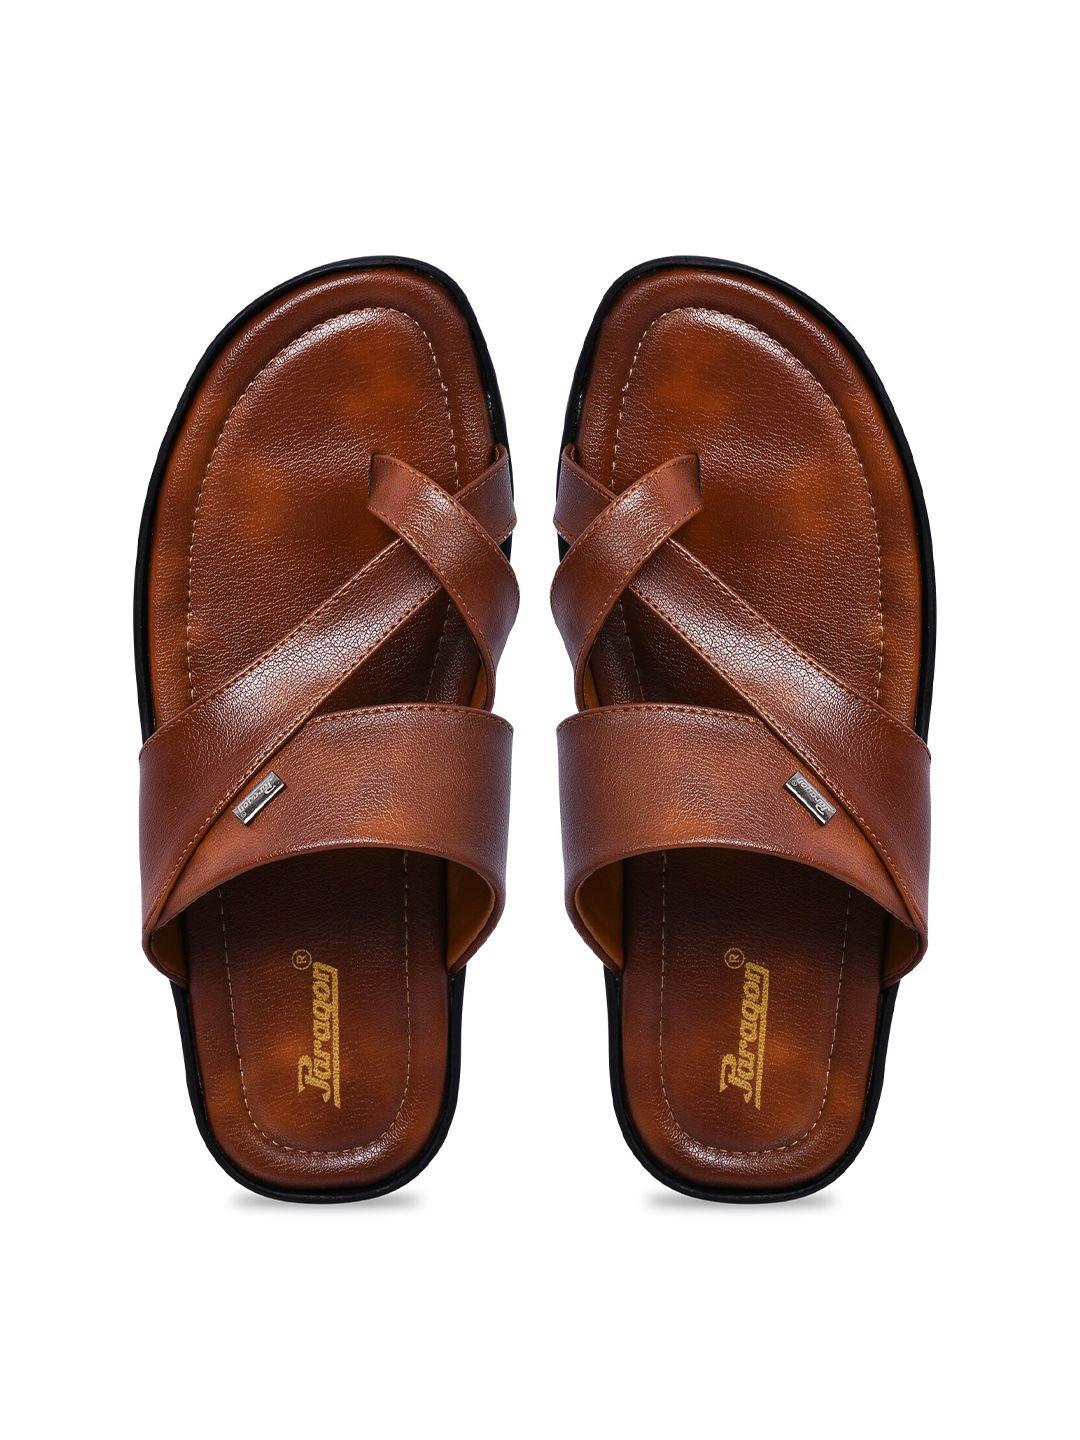 paragon men textured lightweight comfort sandals